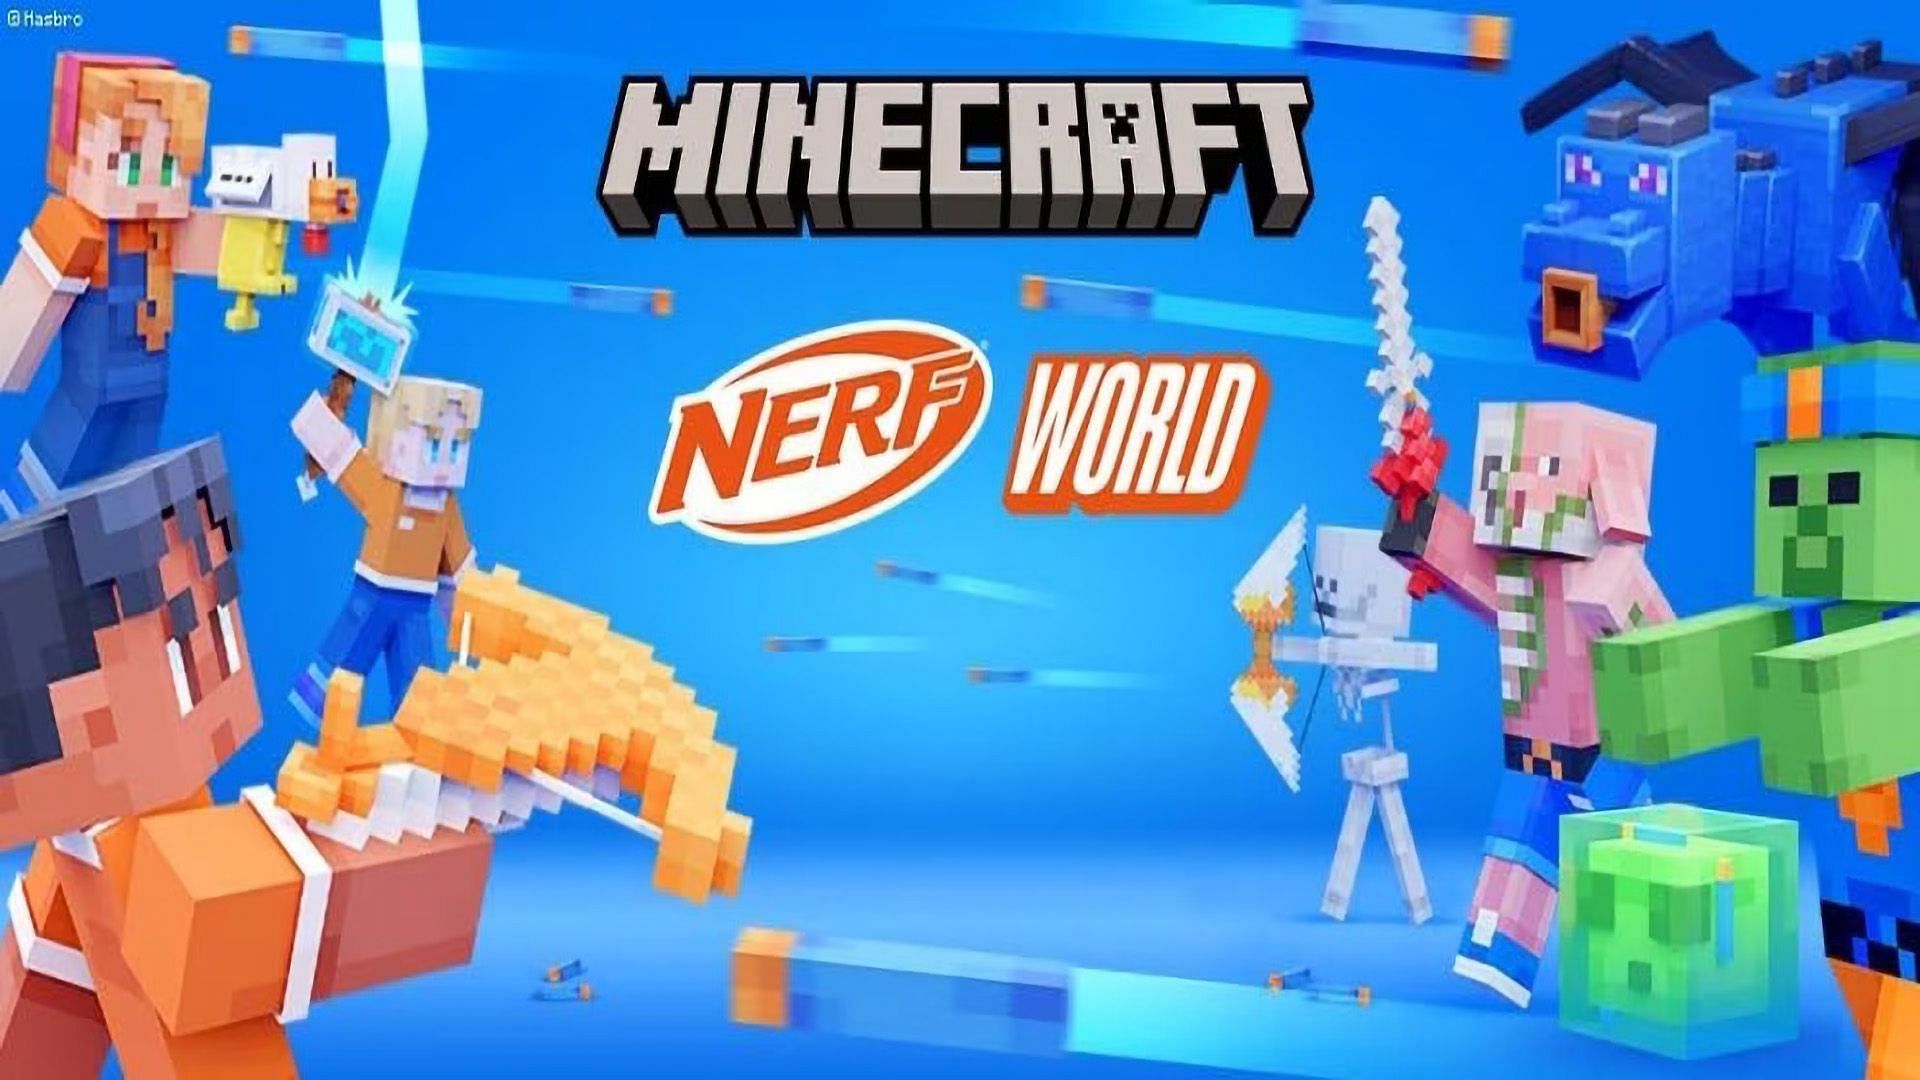 Minecraft and NERF Partner on Minecraft NERF World DLC in October